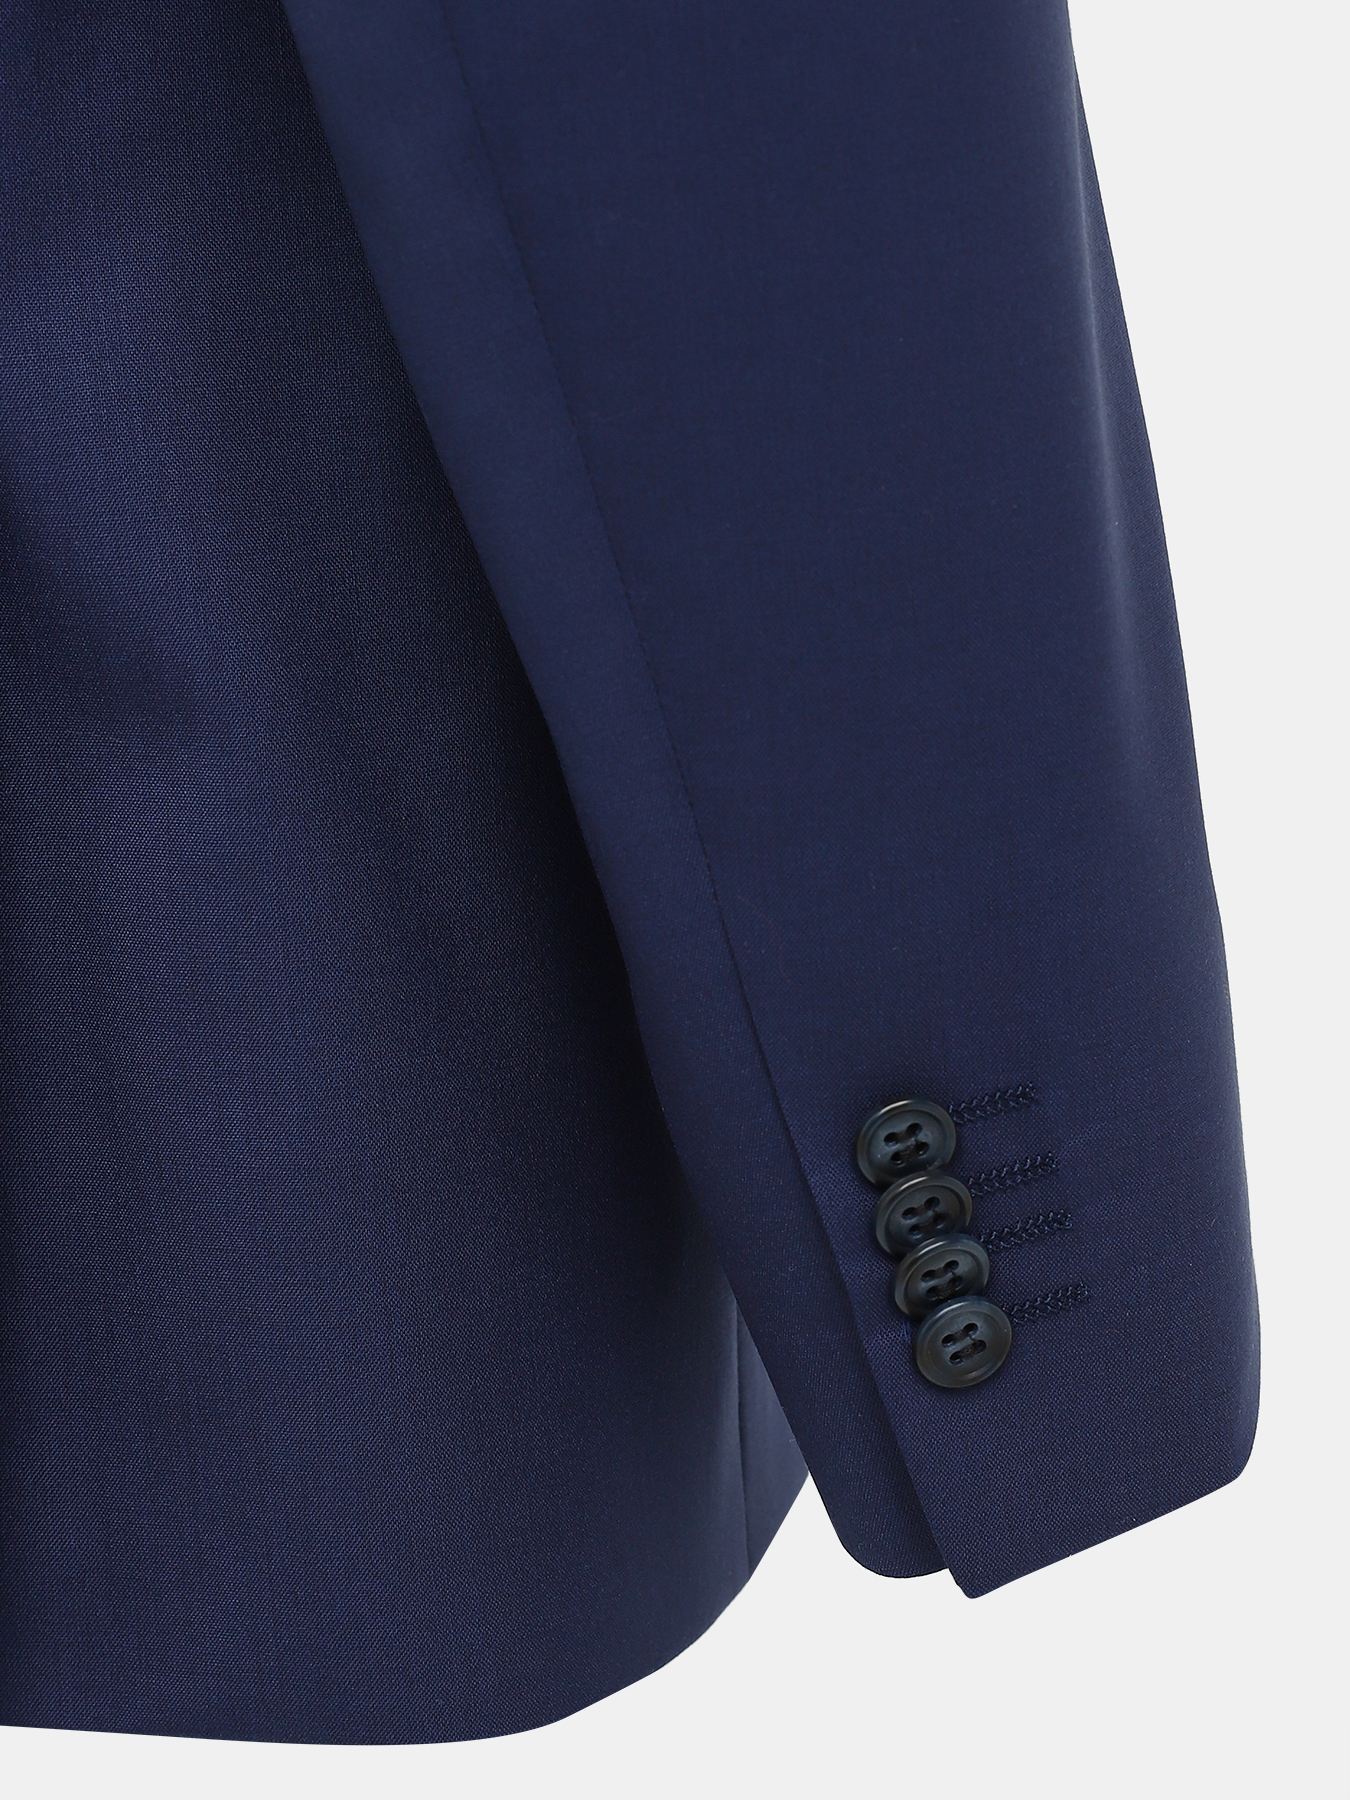 Пиджак Alessandro Manzoni 421123-072, цвет синий, размер 50 - фото 5